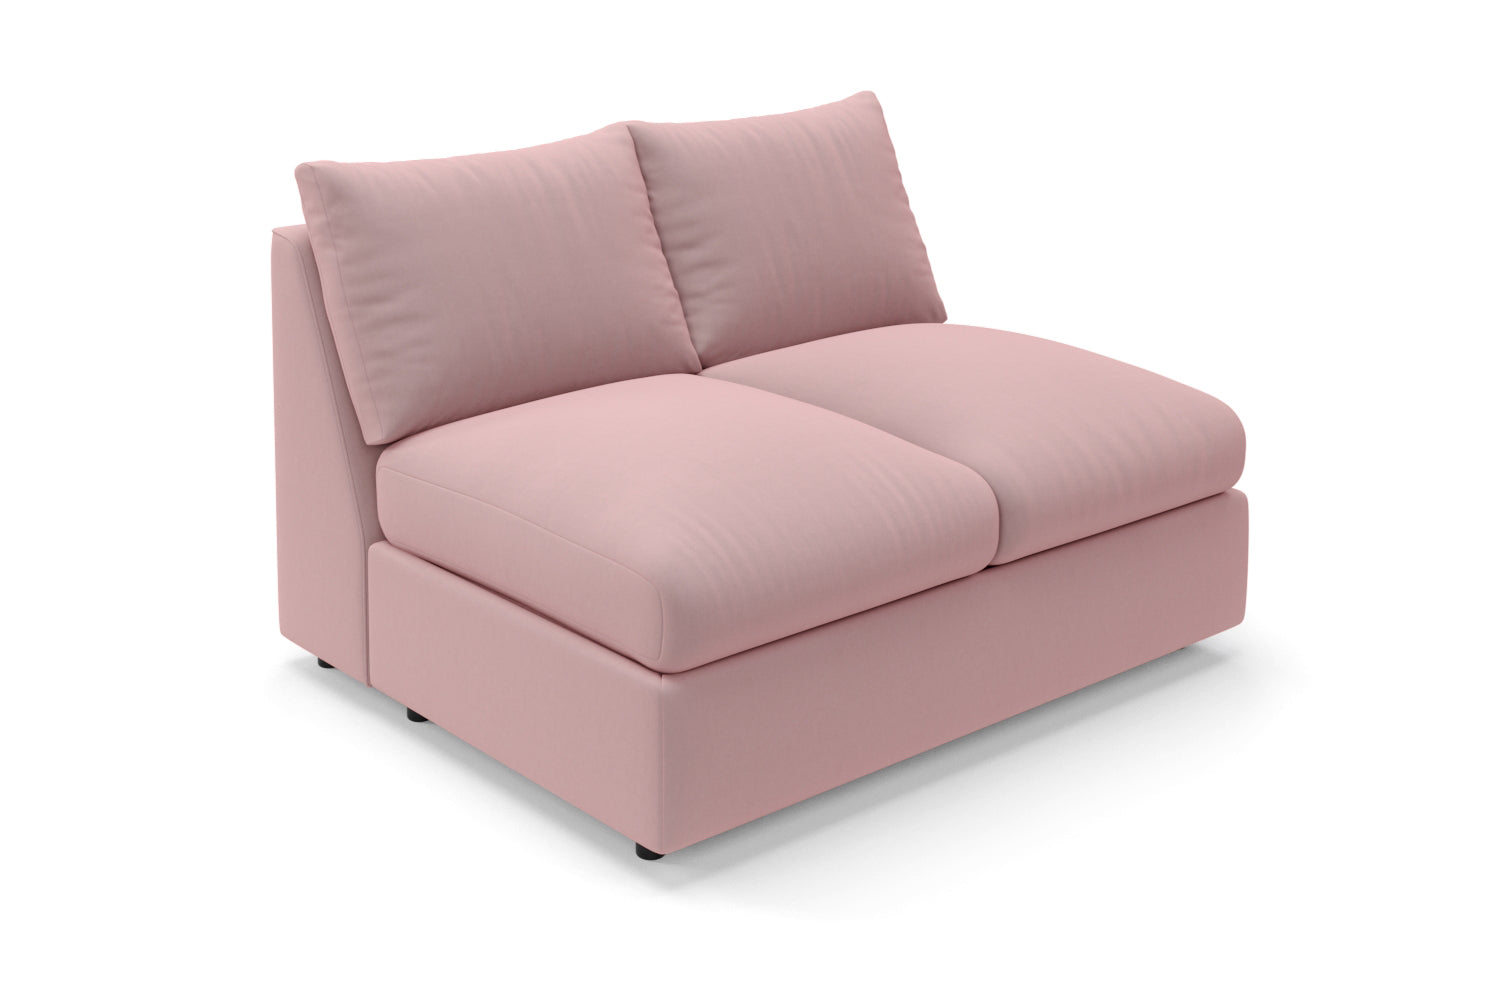 The Cloud Sundae - 2 Seater Sofa - Blush